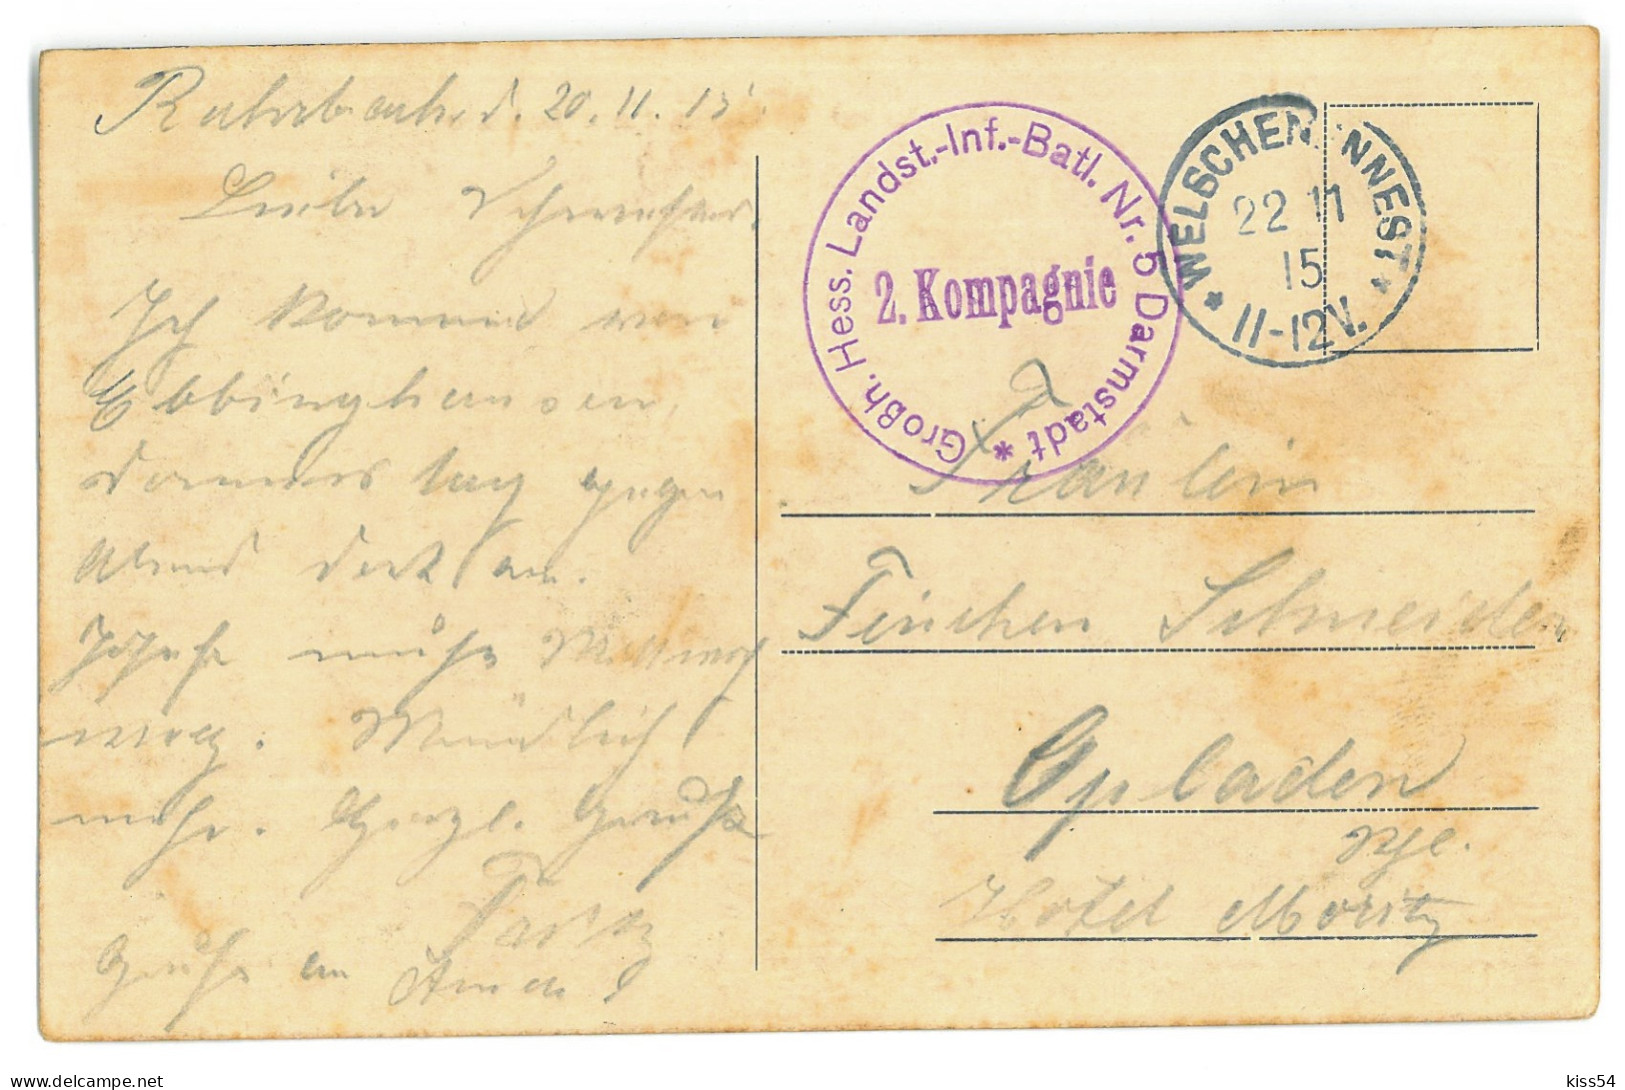 BL 38 - 21975 GRODNO, High School, Belarus - Old Postcard, CENSOR - Used - 1915 - Bielorussia